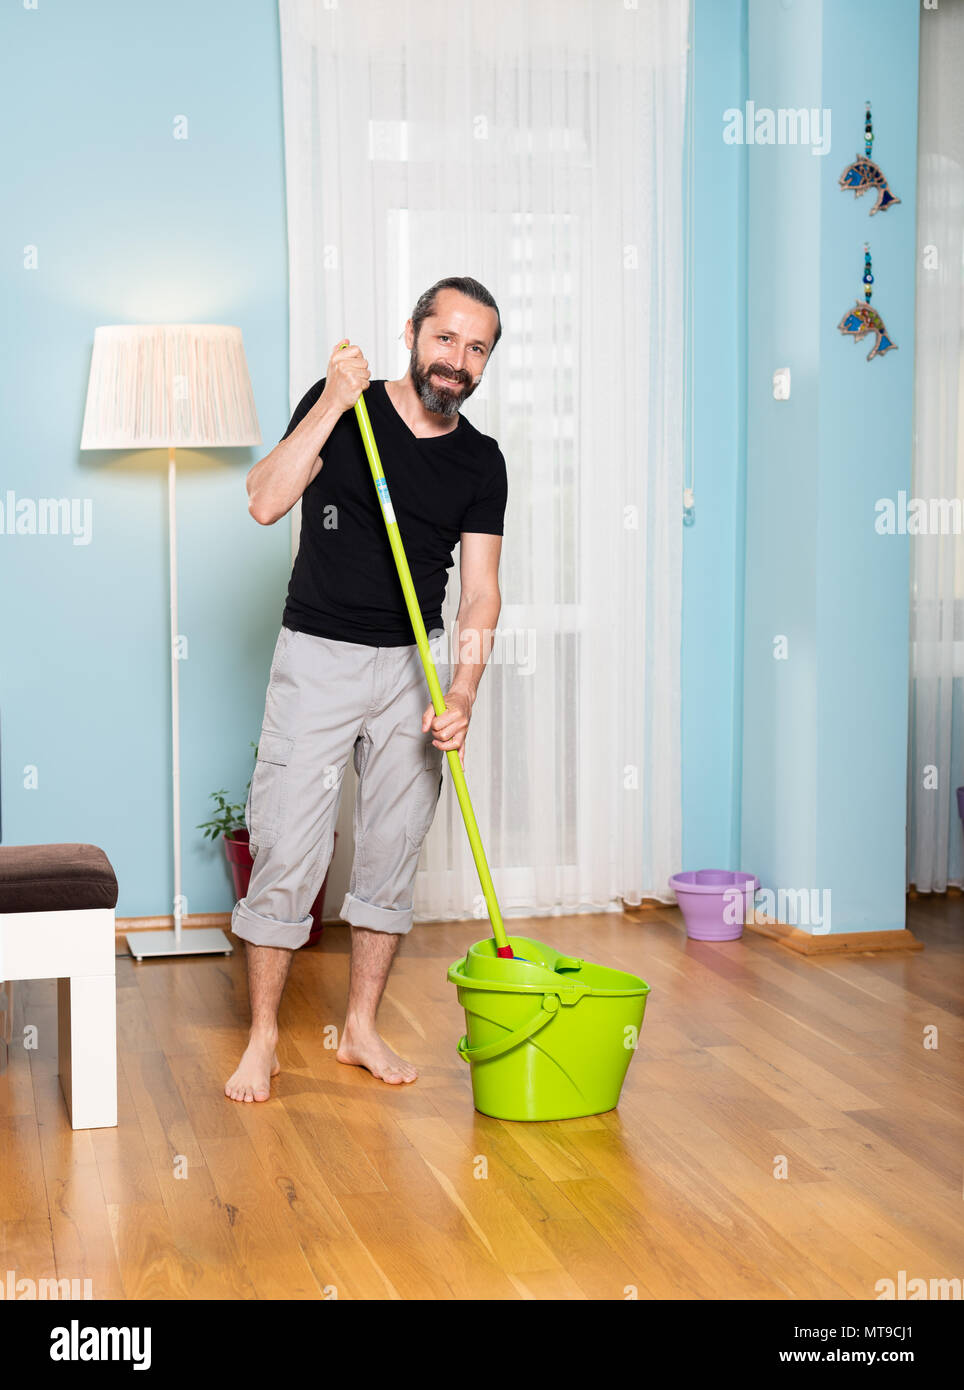 https://c8.alamy.com/comp/MT9CJ1/house-cleaning-house-cleaning-man-house-man-sweeping-and-mopping-MT9CJ1.jpg